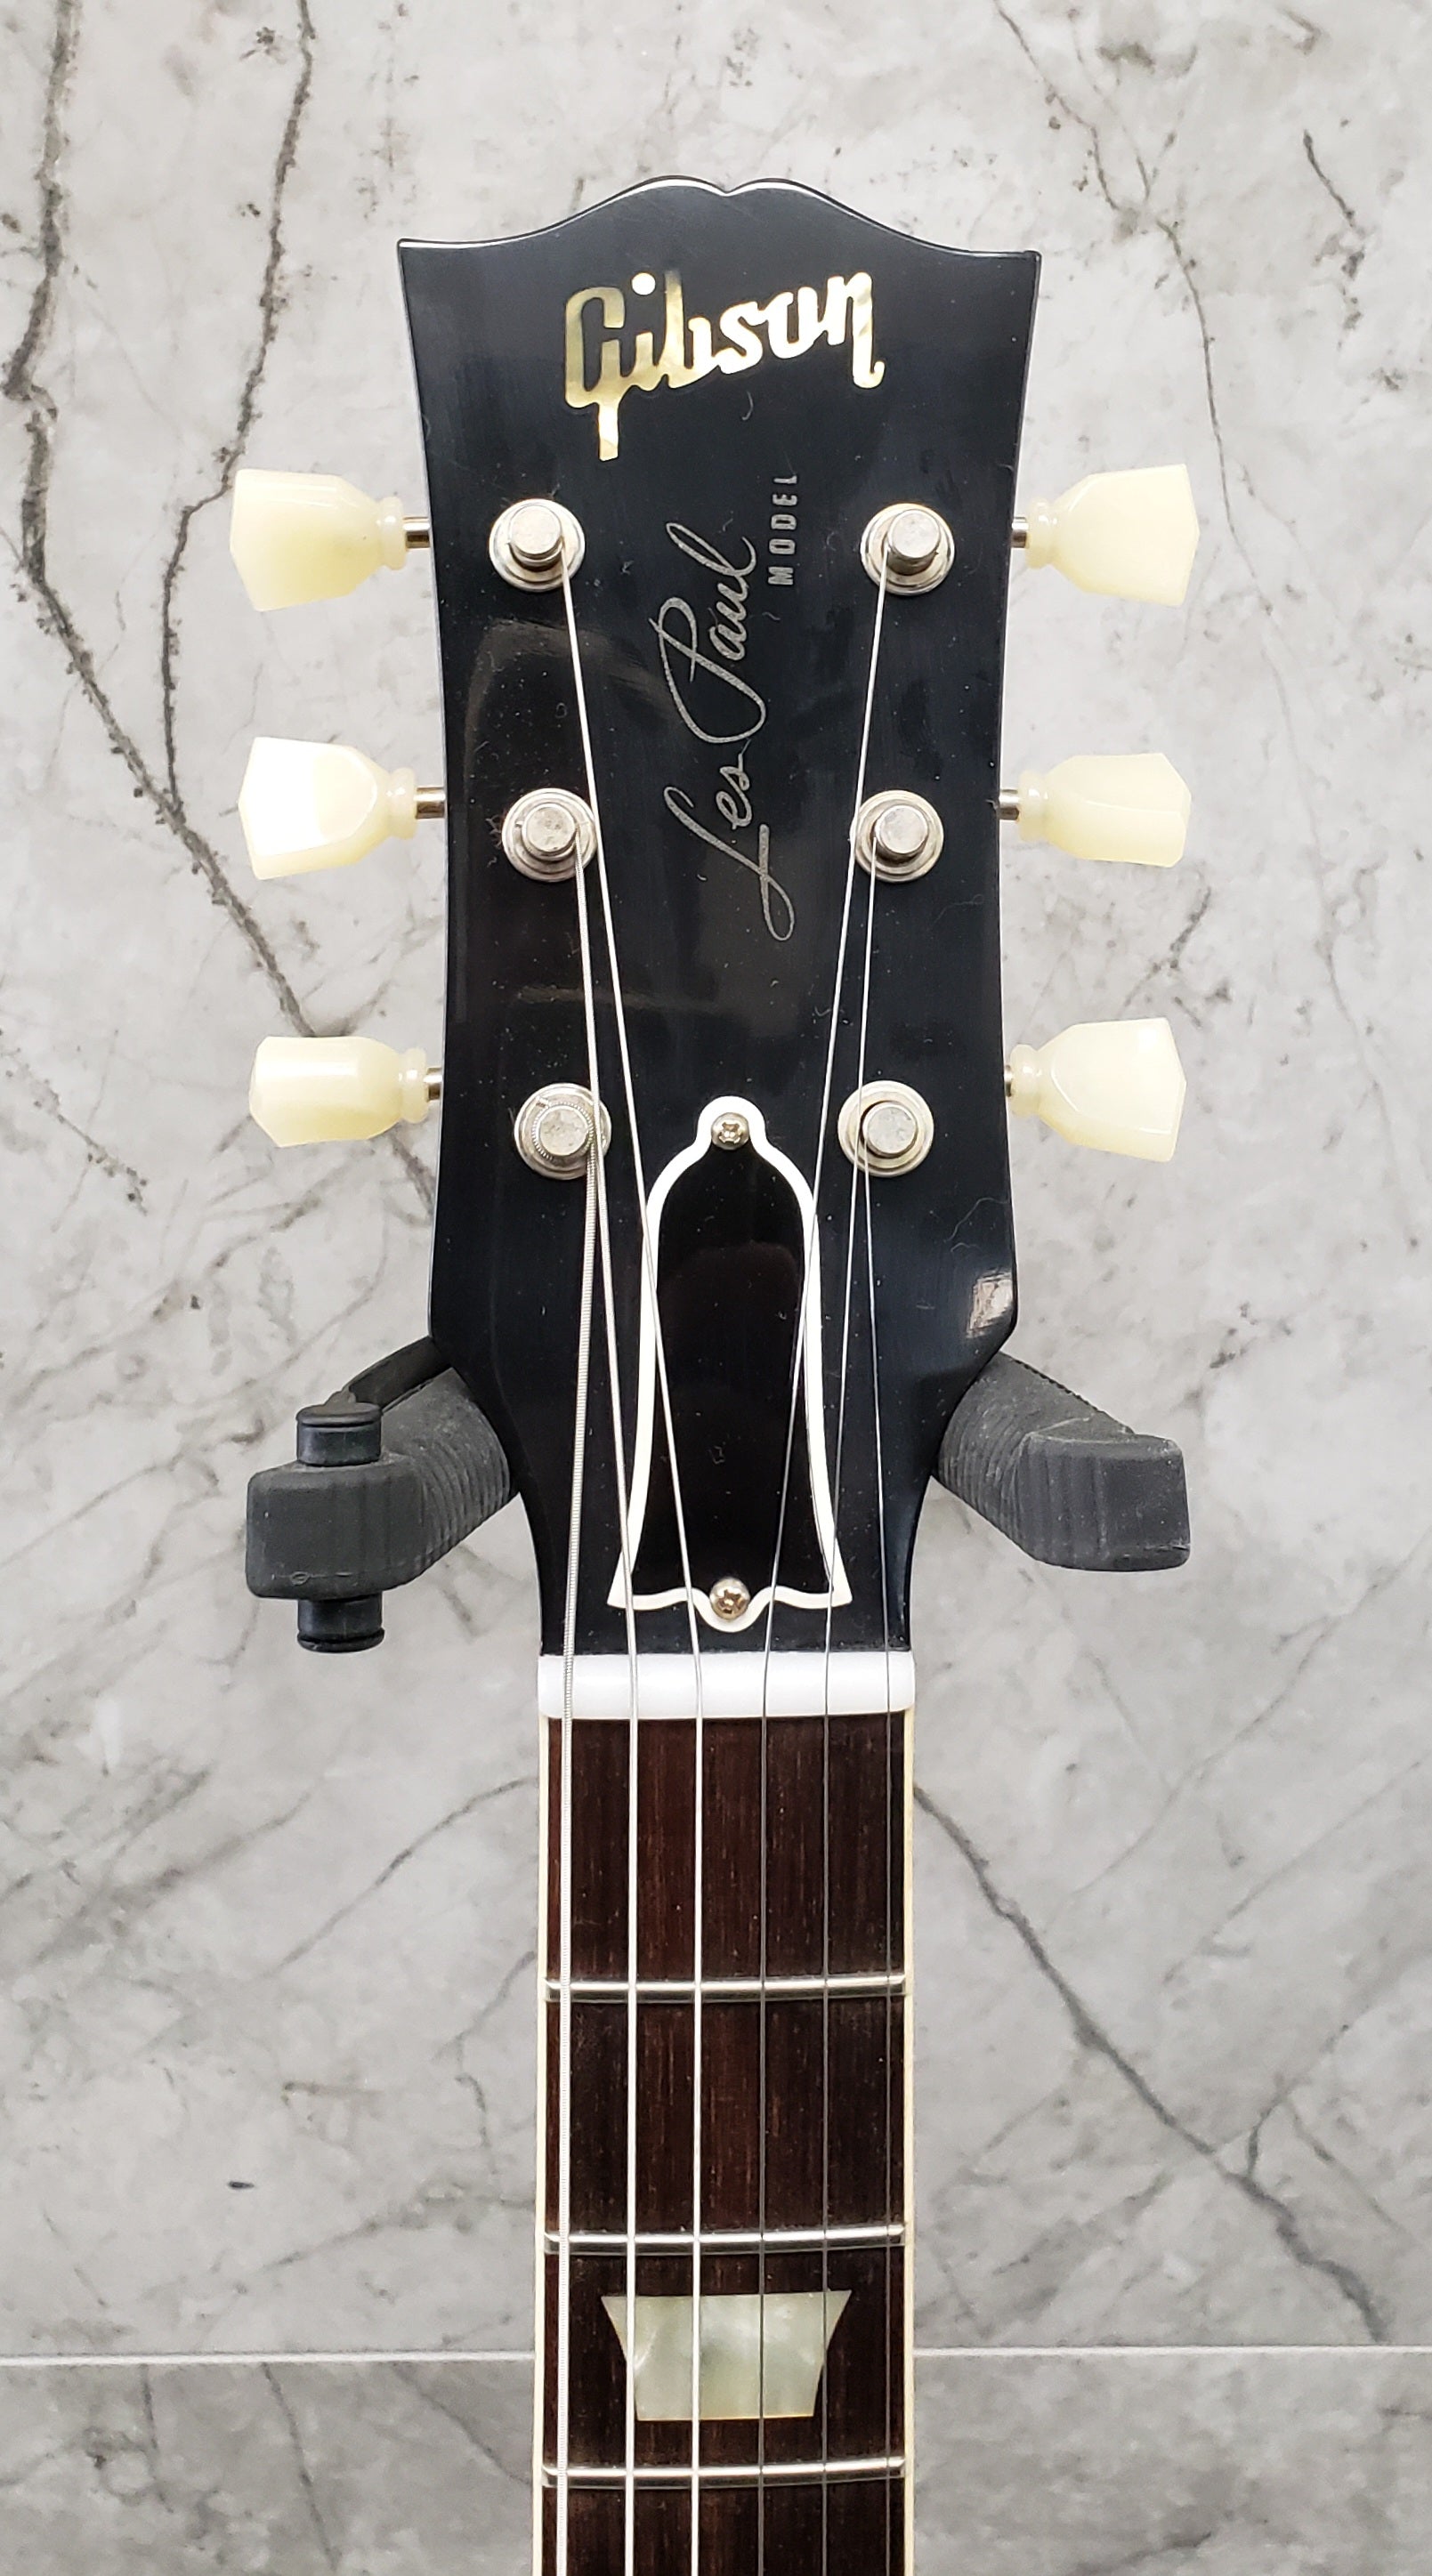 Gibson Custom Shop 1959 Les Paul Standard Reissue VOS Sunrise Tea - Nickel Hardware LPR59VOSRNH SERIAL NUMBER 901746 - 8.6 LBS